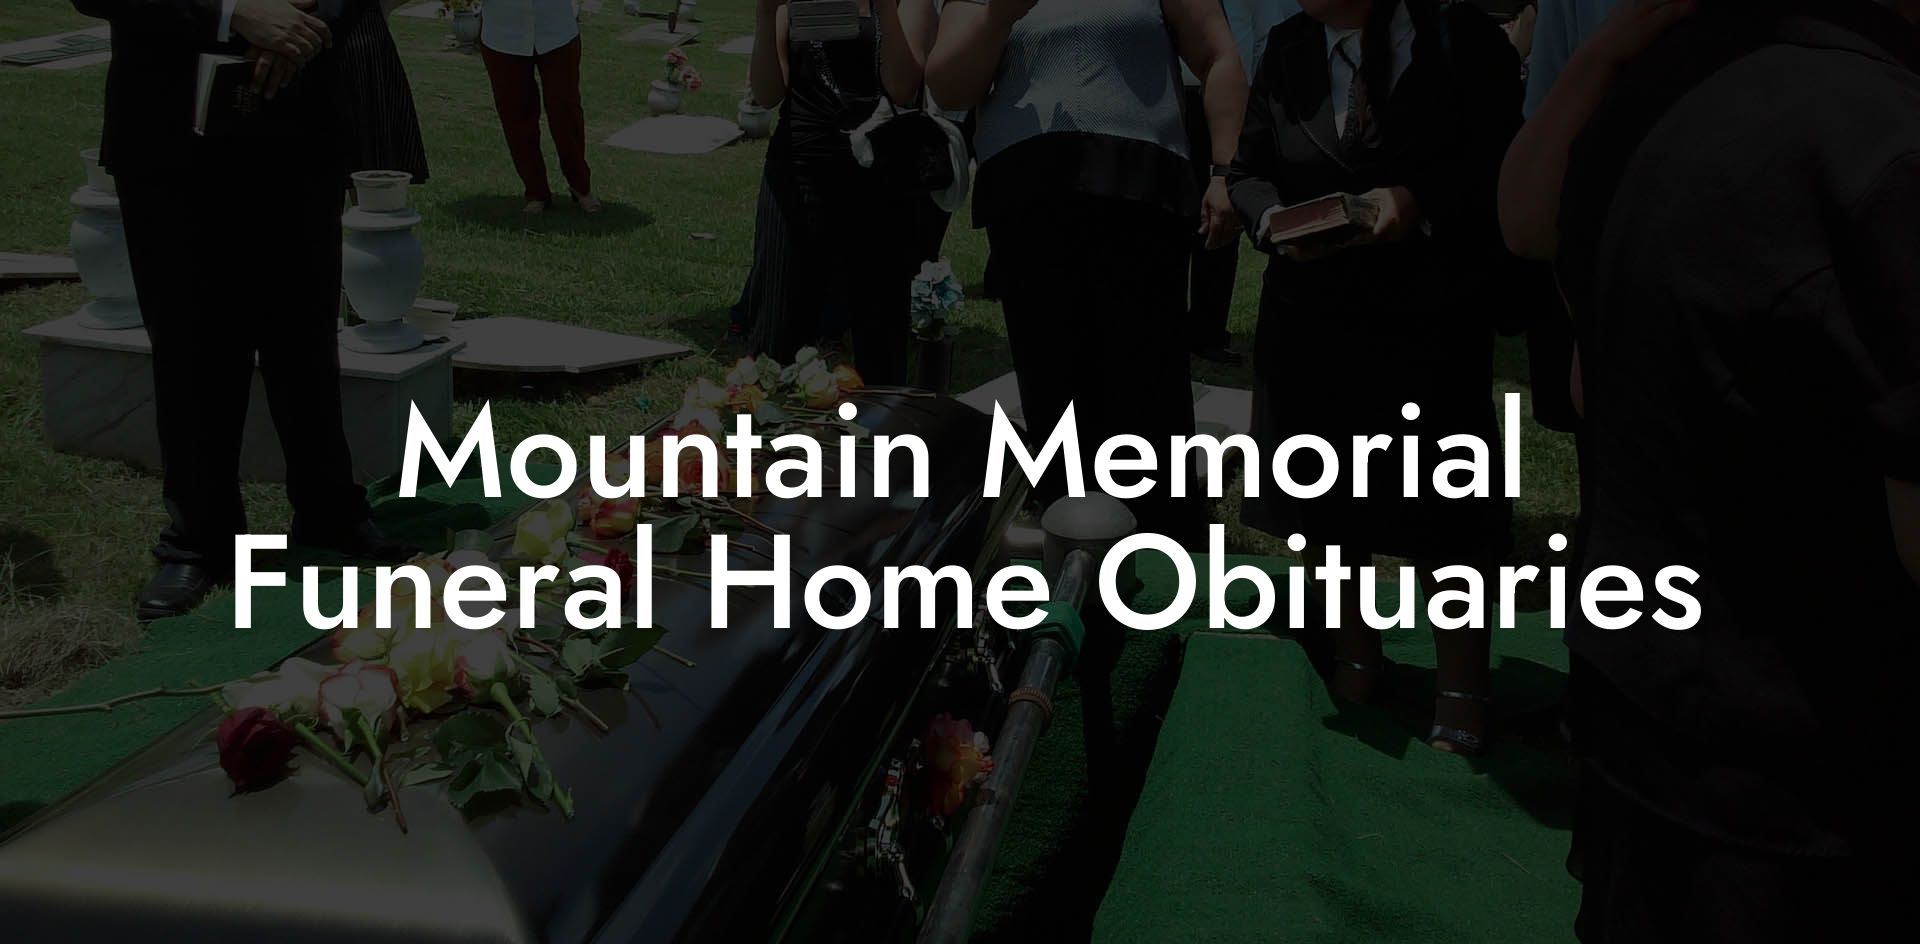 Mountain Memorial Funeral Home Obituaries